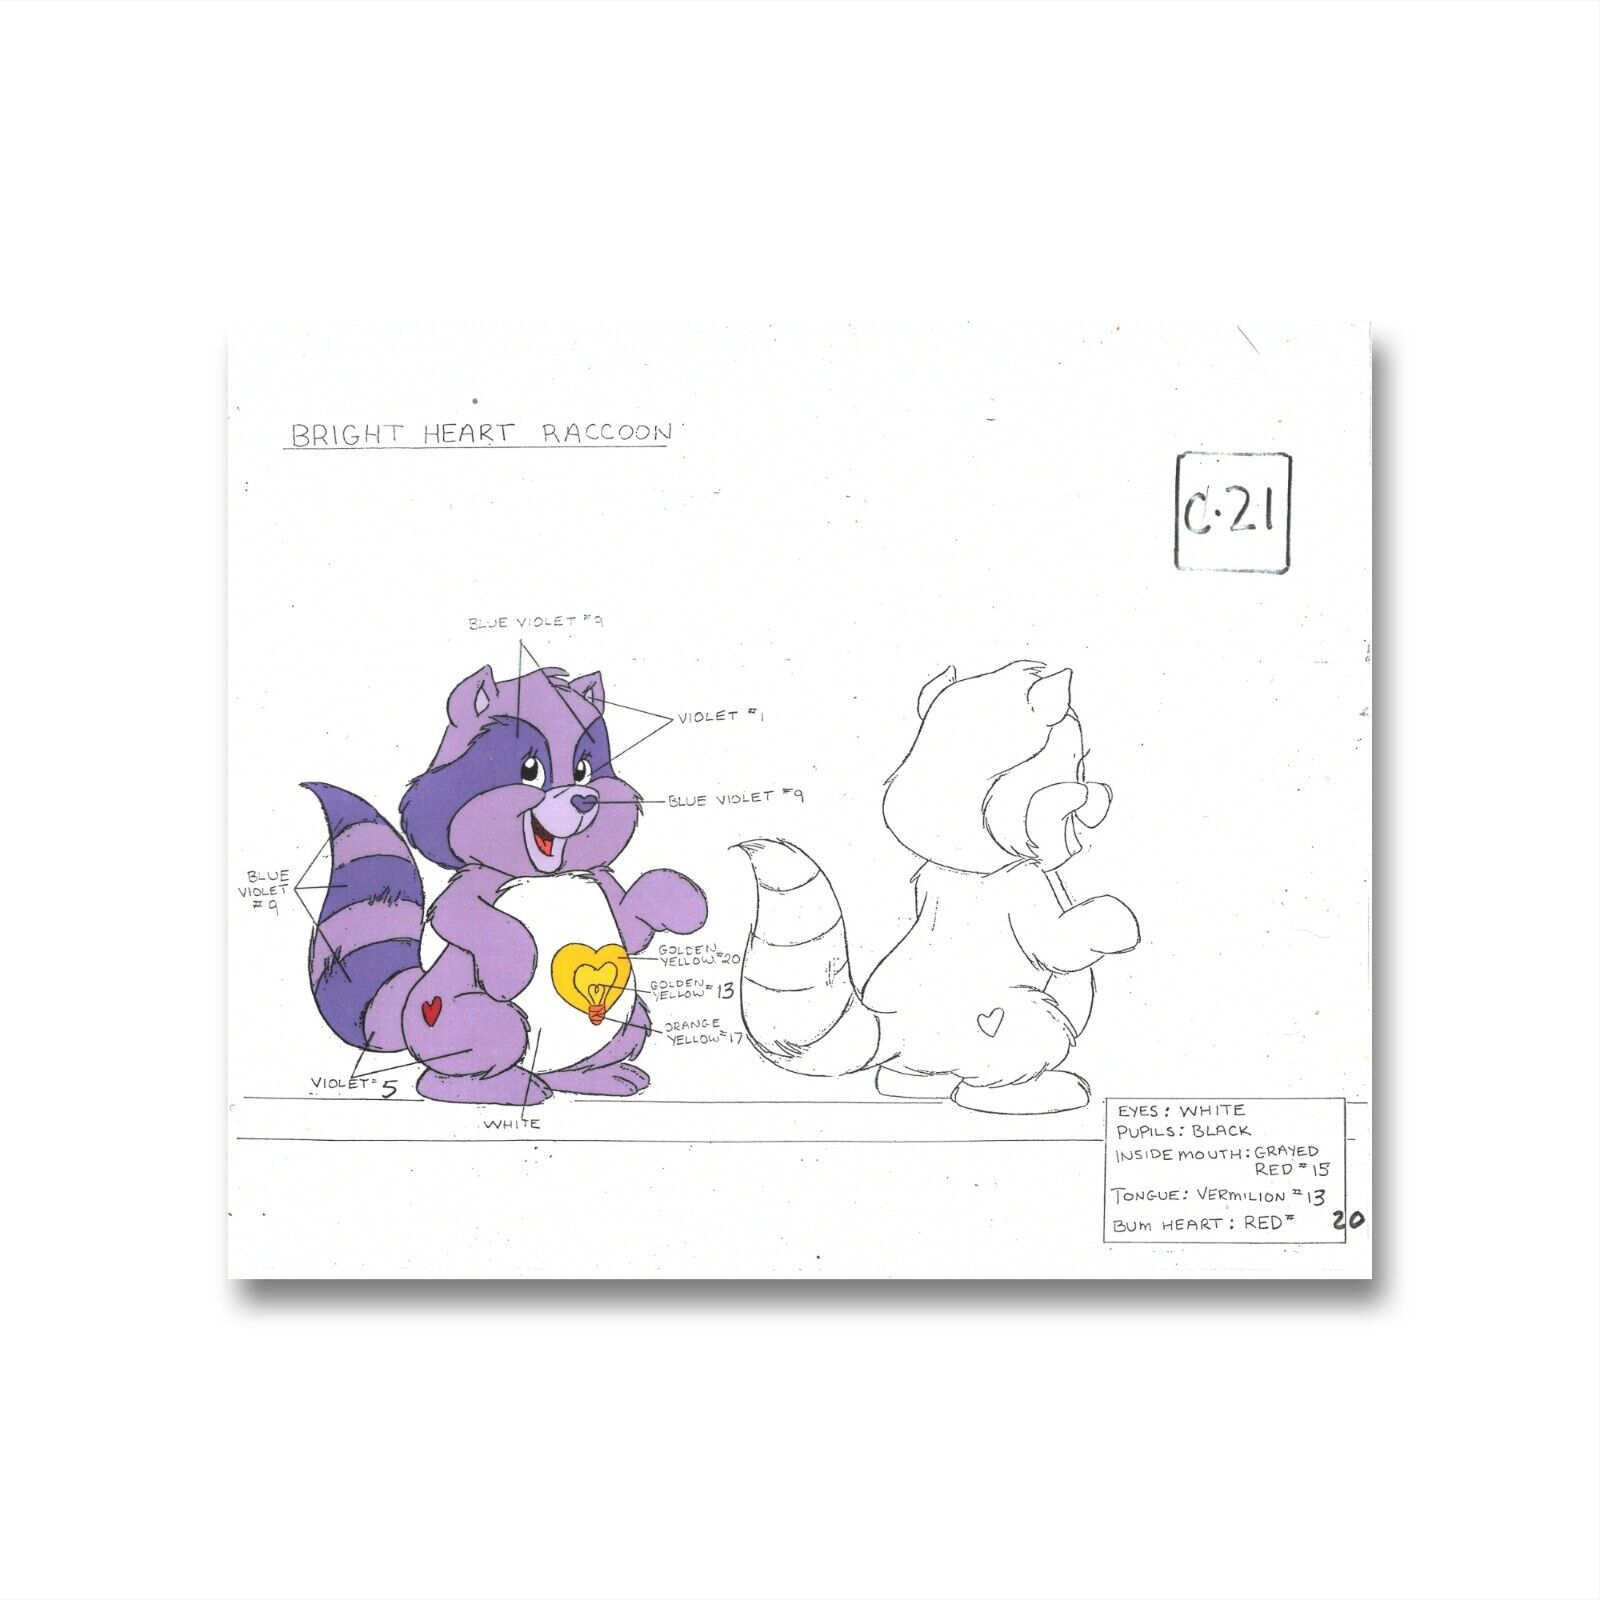 Care Bears Original Production Color Model Sheet: Bright Heart Raccoon, SSV1140